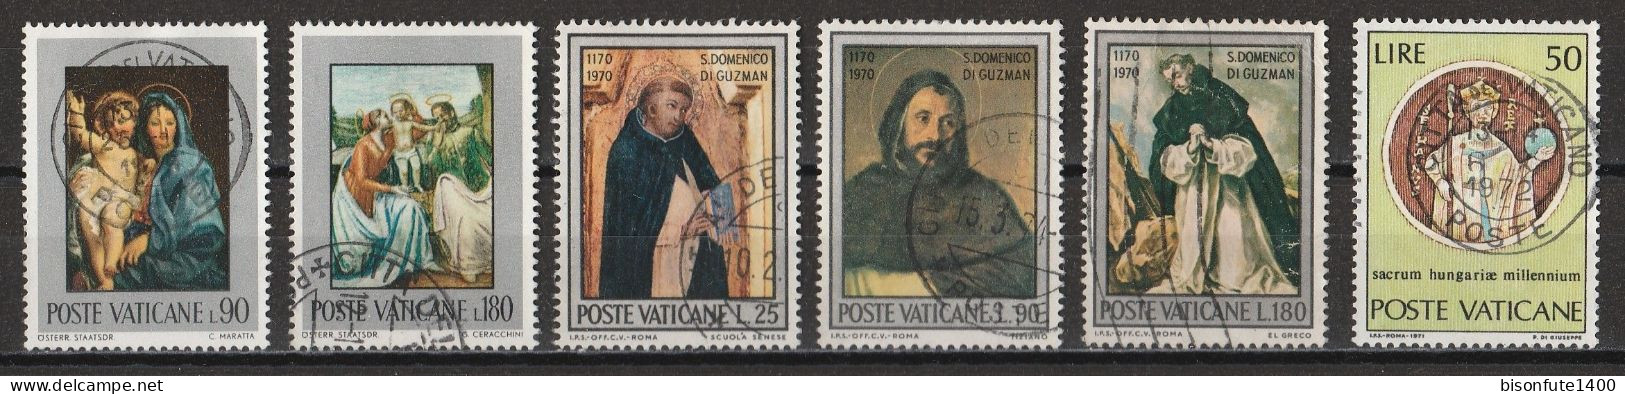 Vatican 1971 : Timbres Yvert & Tellier N° 518 - 519 - 520 - 521 - 522 - 523 - 525 - 526 - 527 - 529 - 530 - 531 Et... - Usati